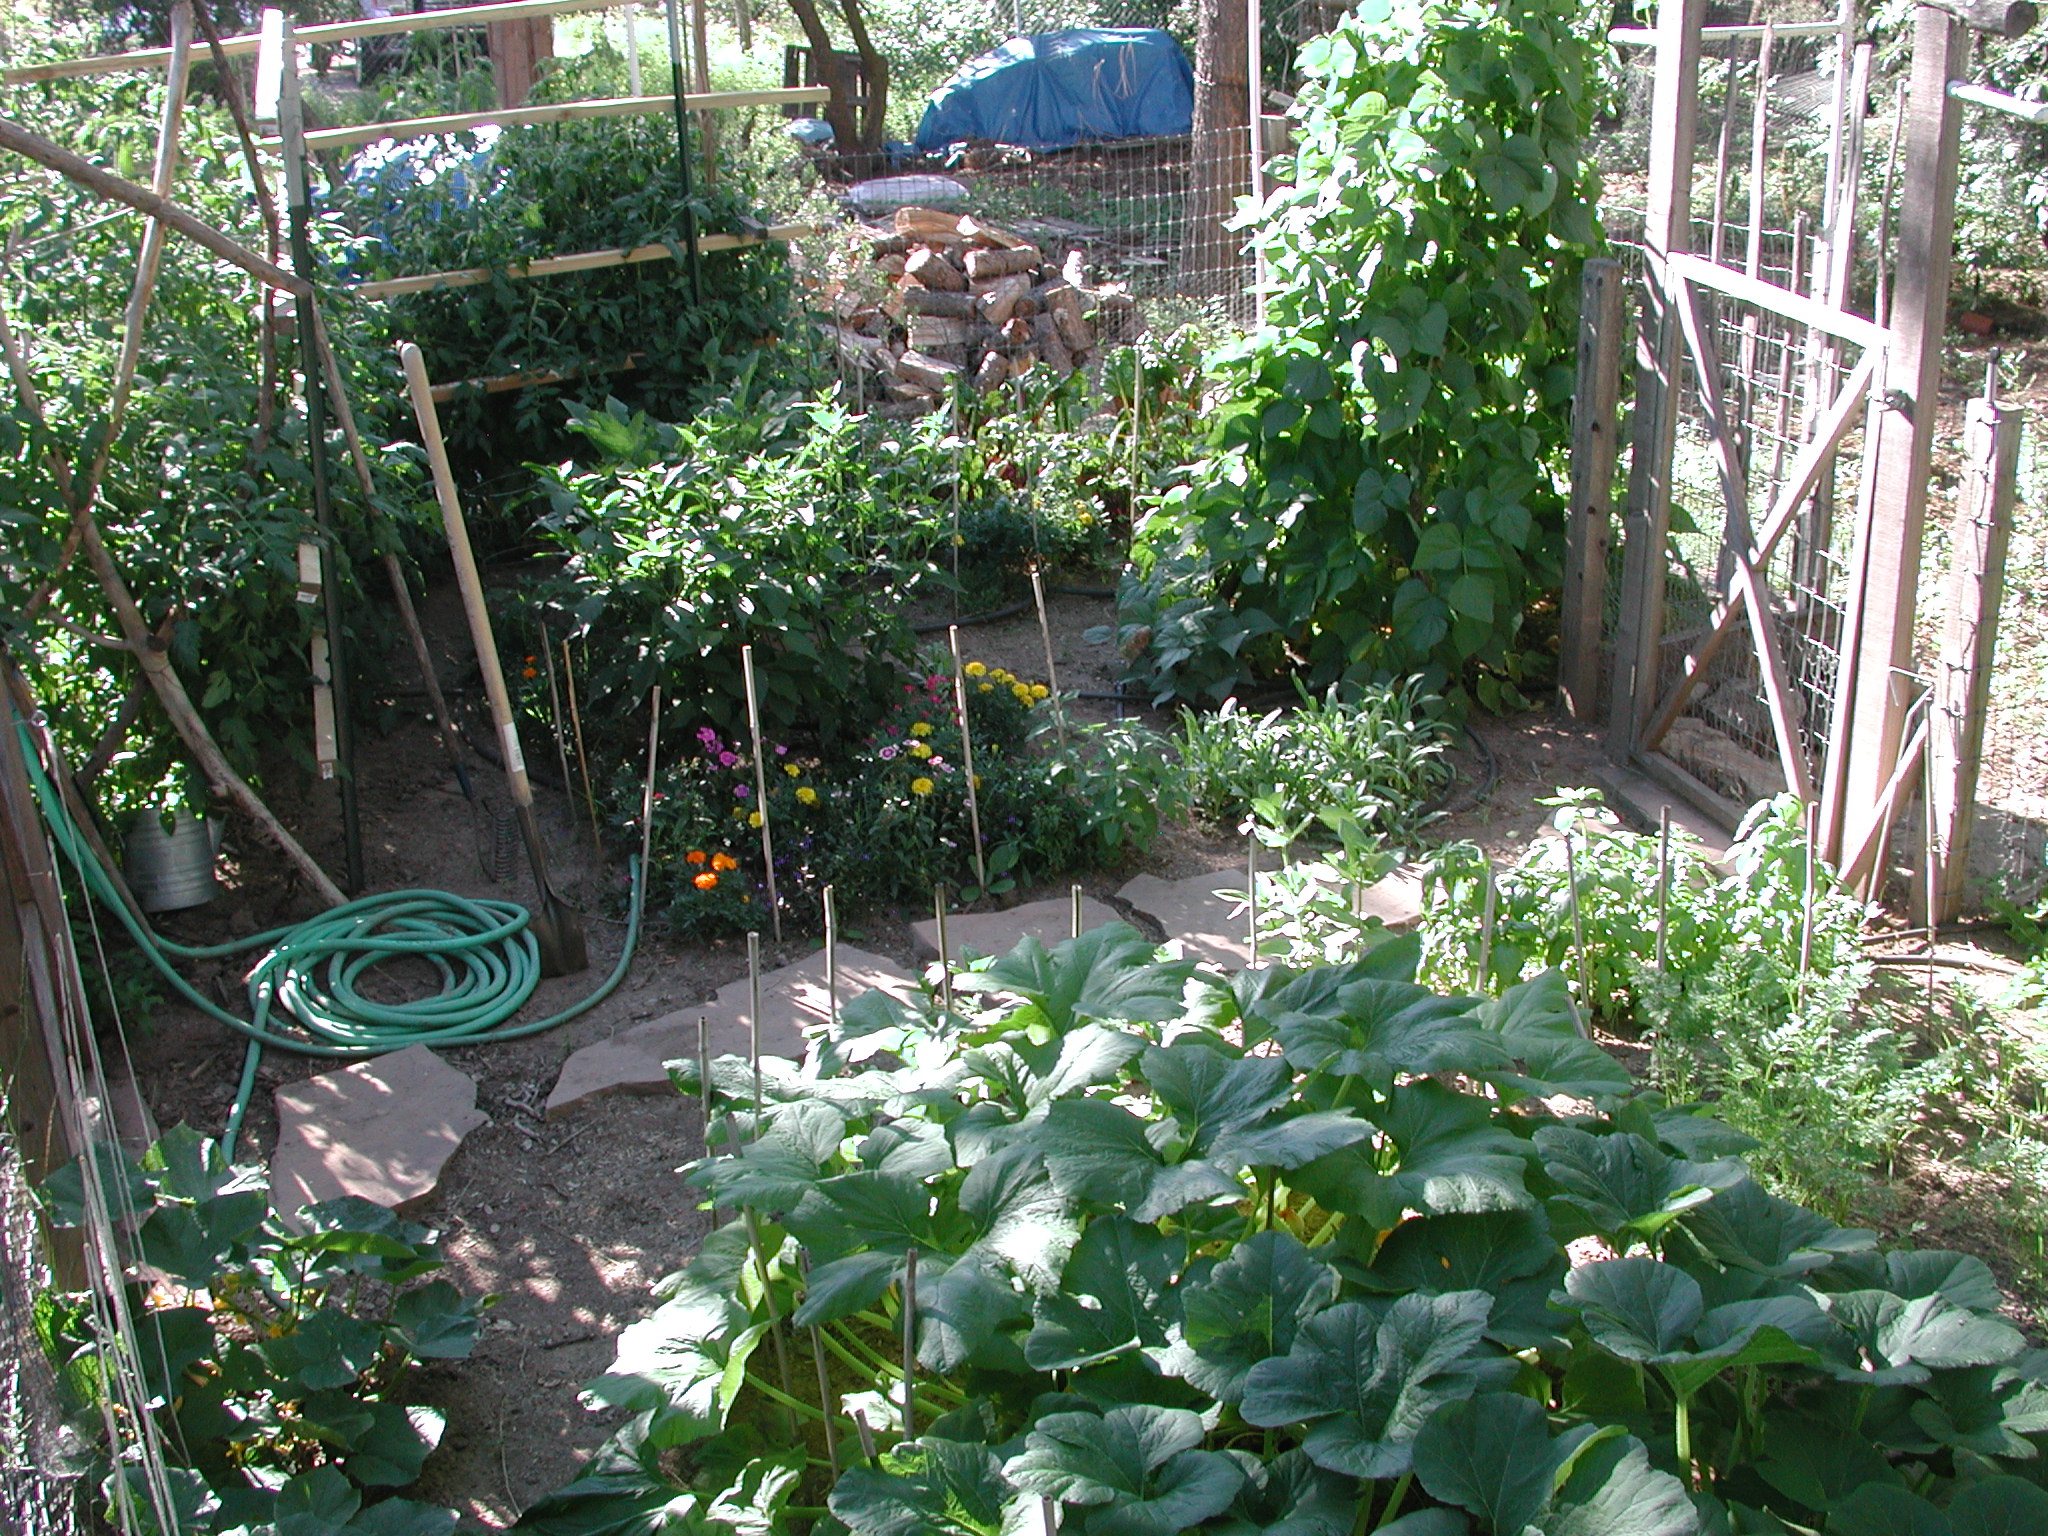 backyard gardener - garden soil preparation - march 29, 2017